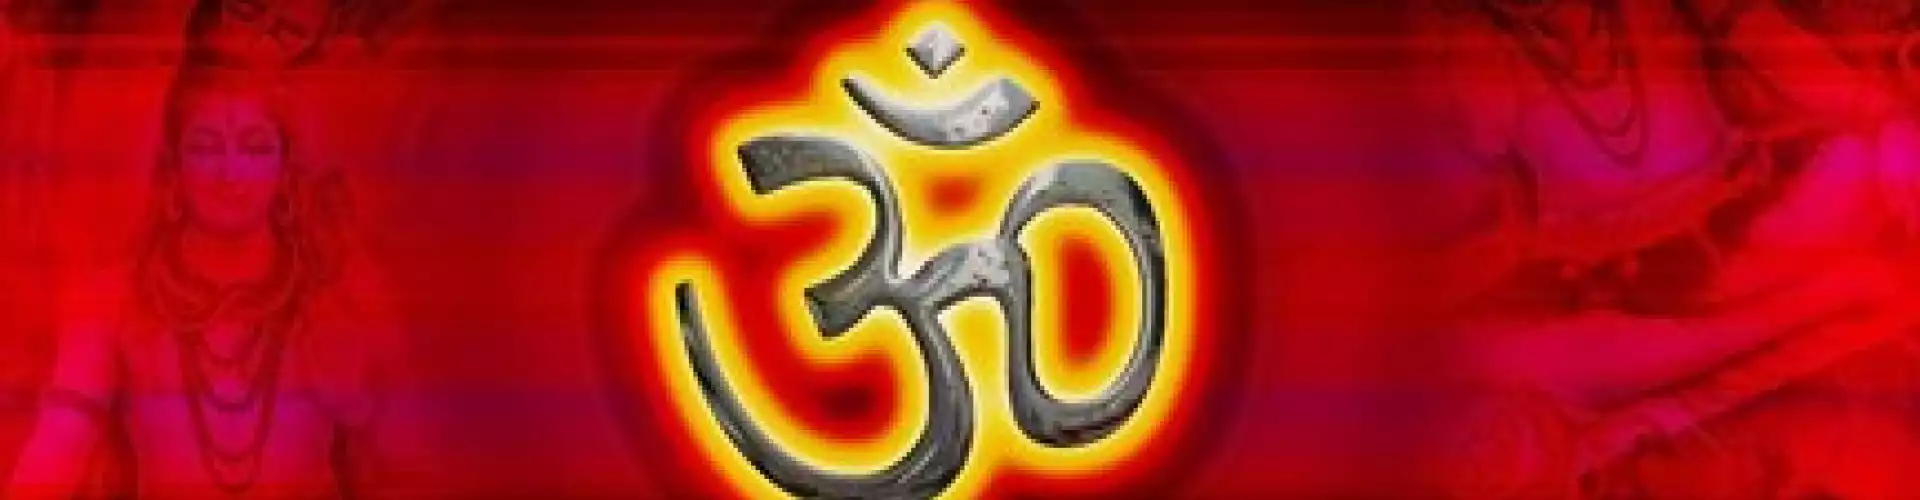 Vedic Mantra OM for Strong Body, Mind, & Spirit